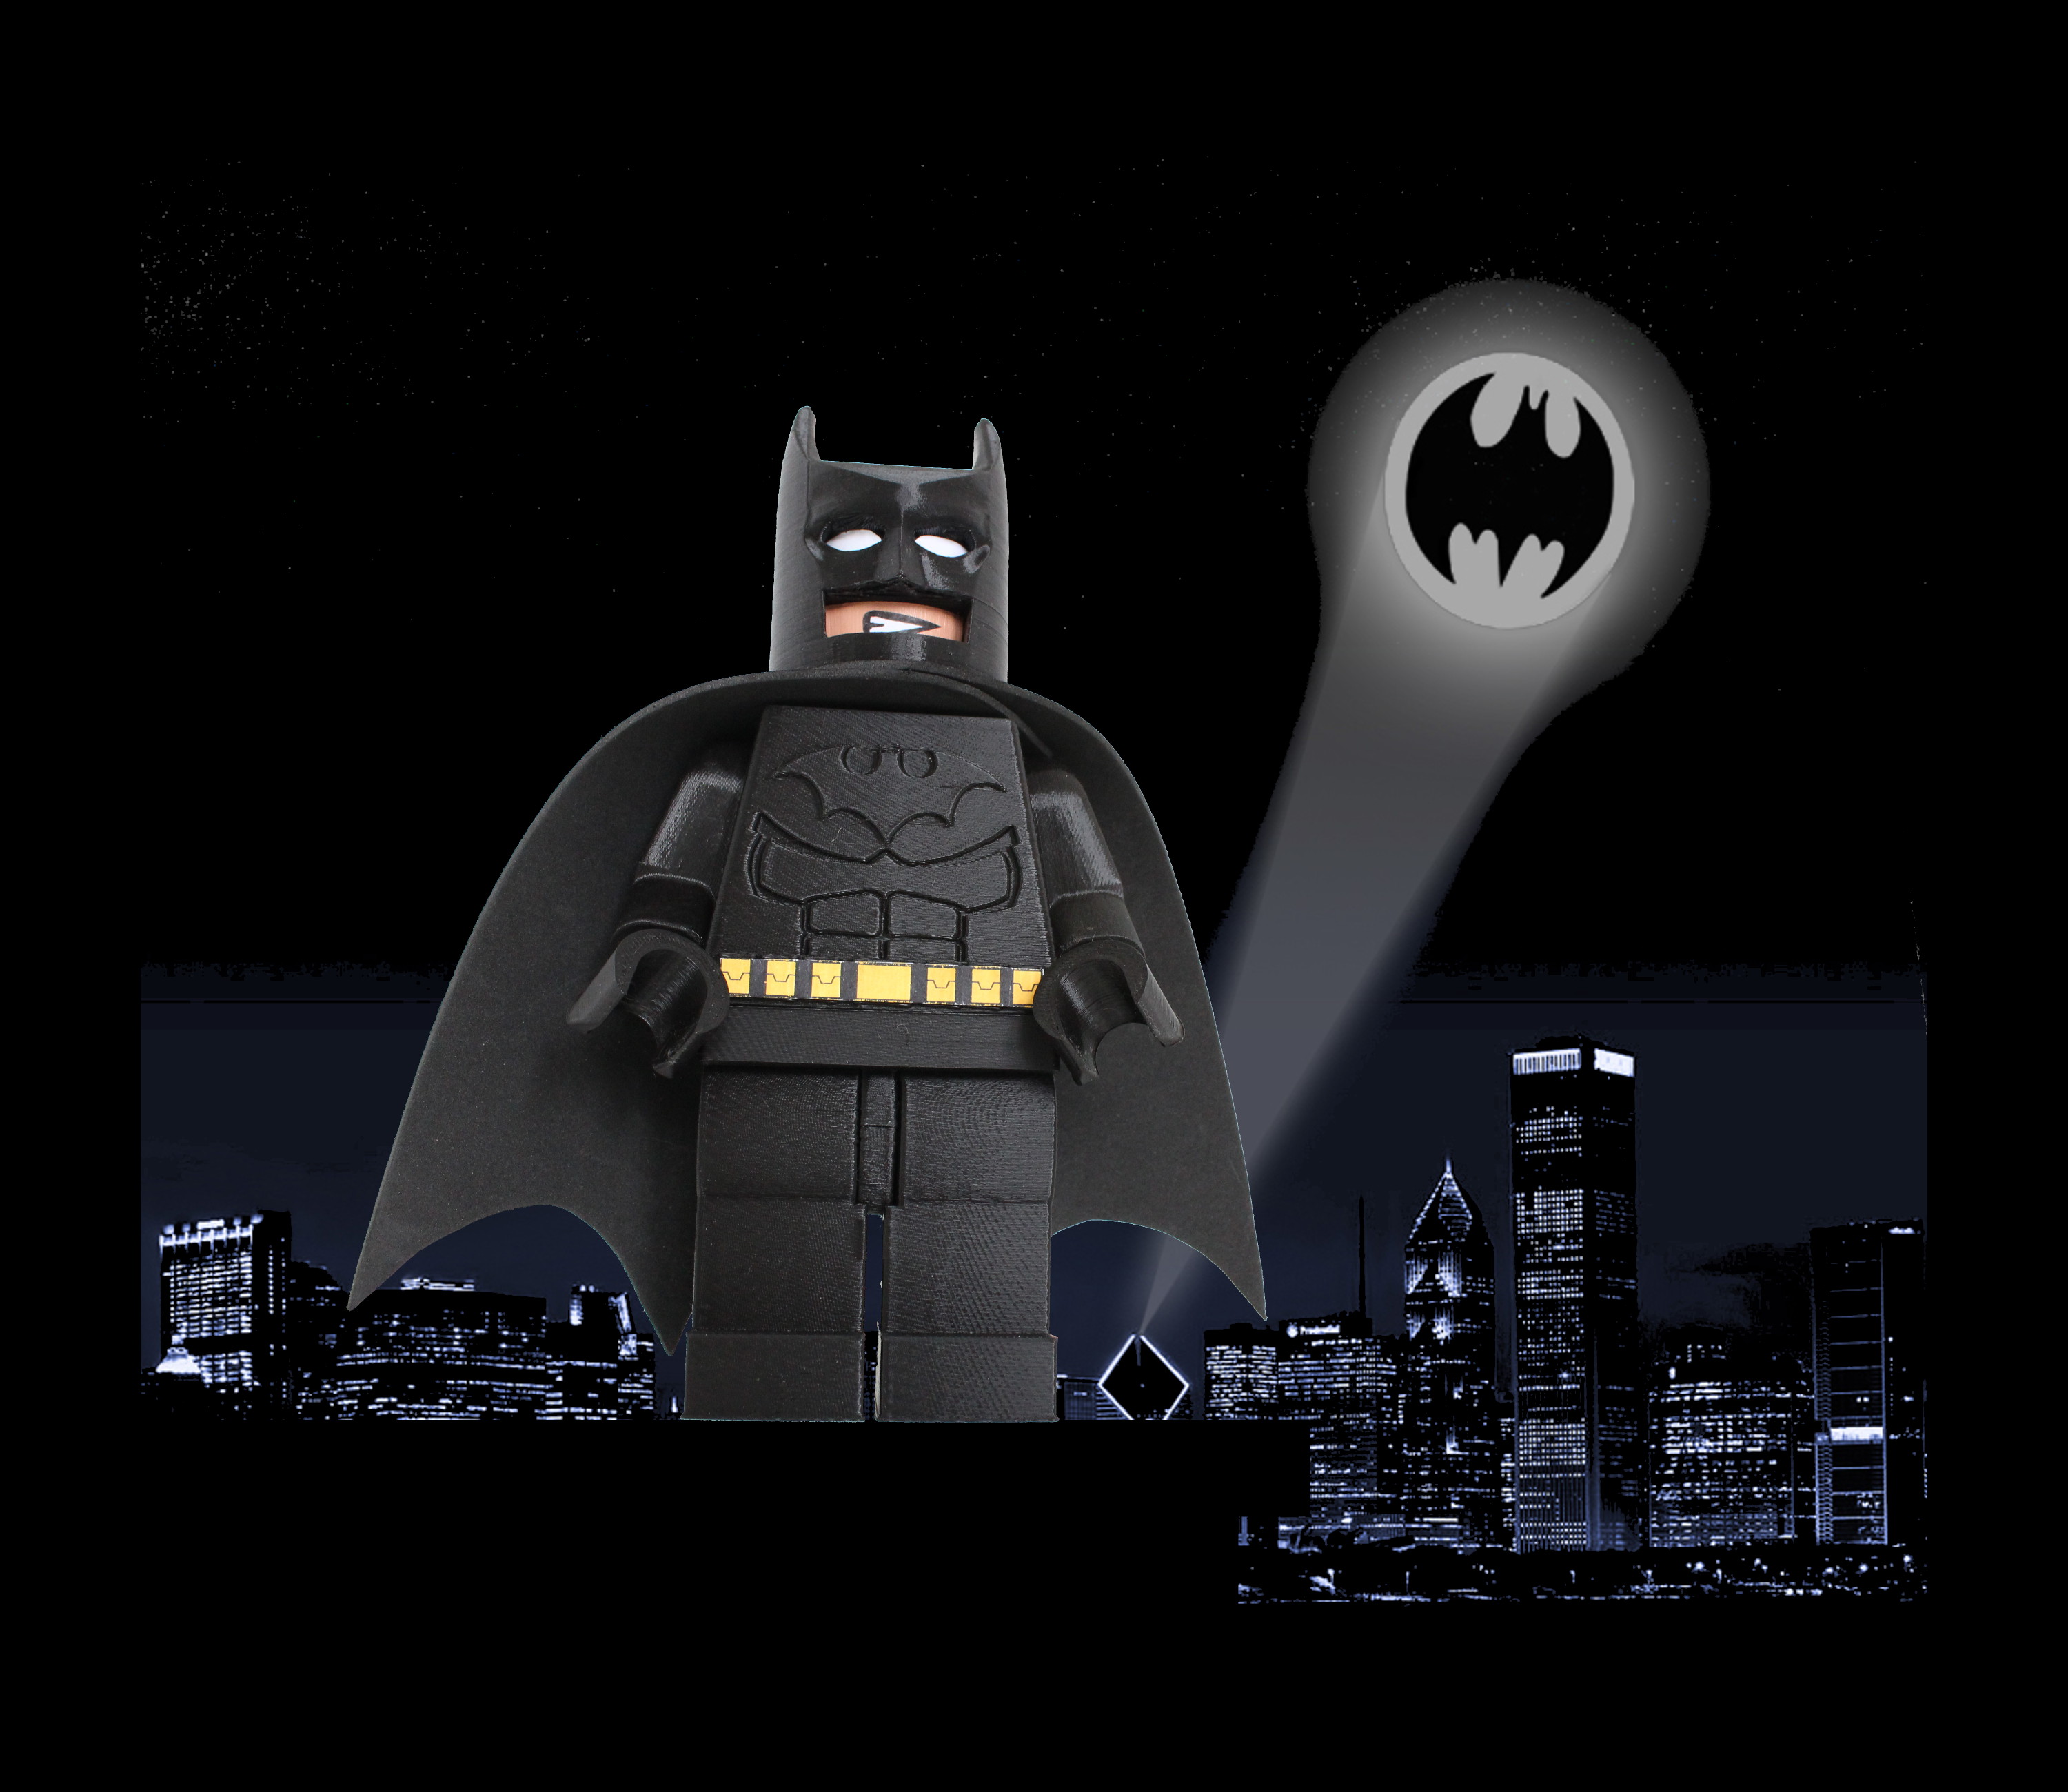 3D Printing a Giant Lego Batman Figure - Technology Spy